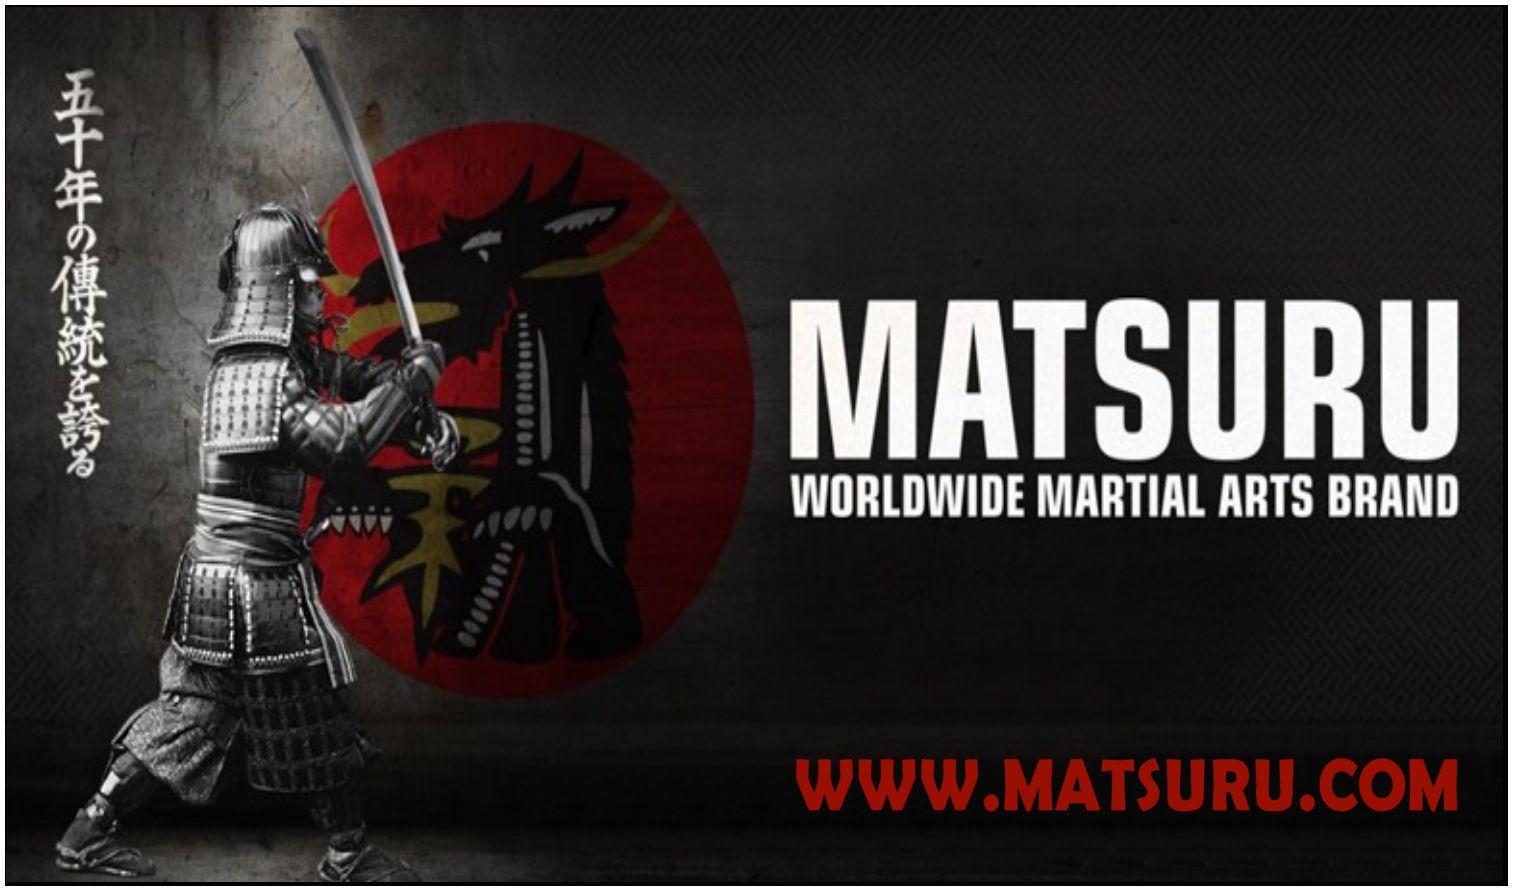 Sponsor 02 – Matsuru